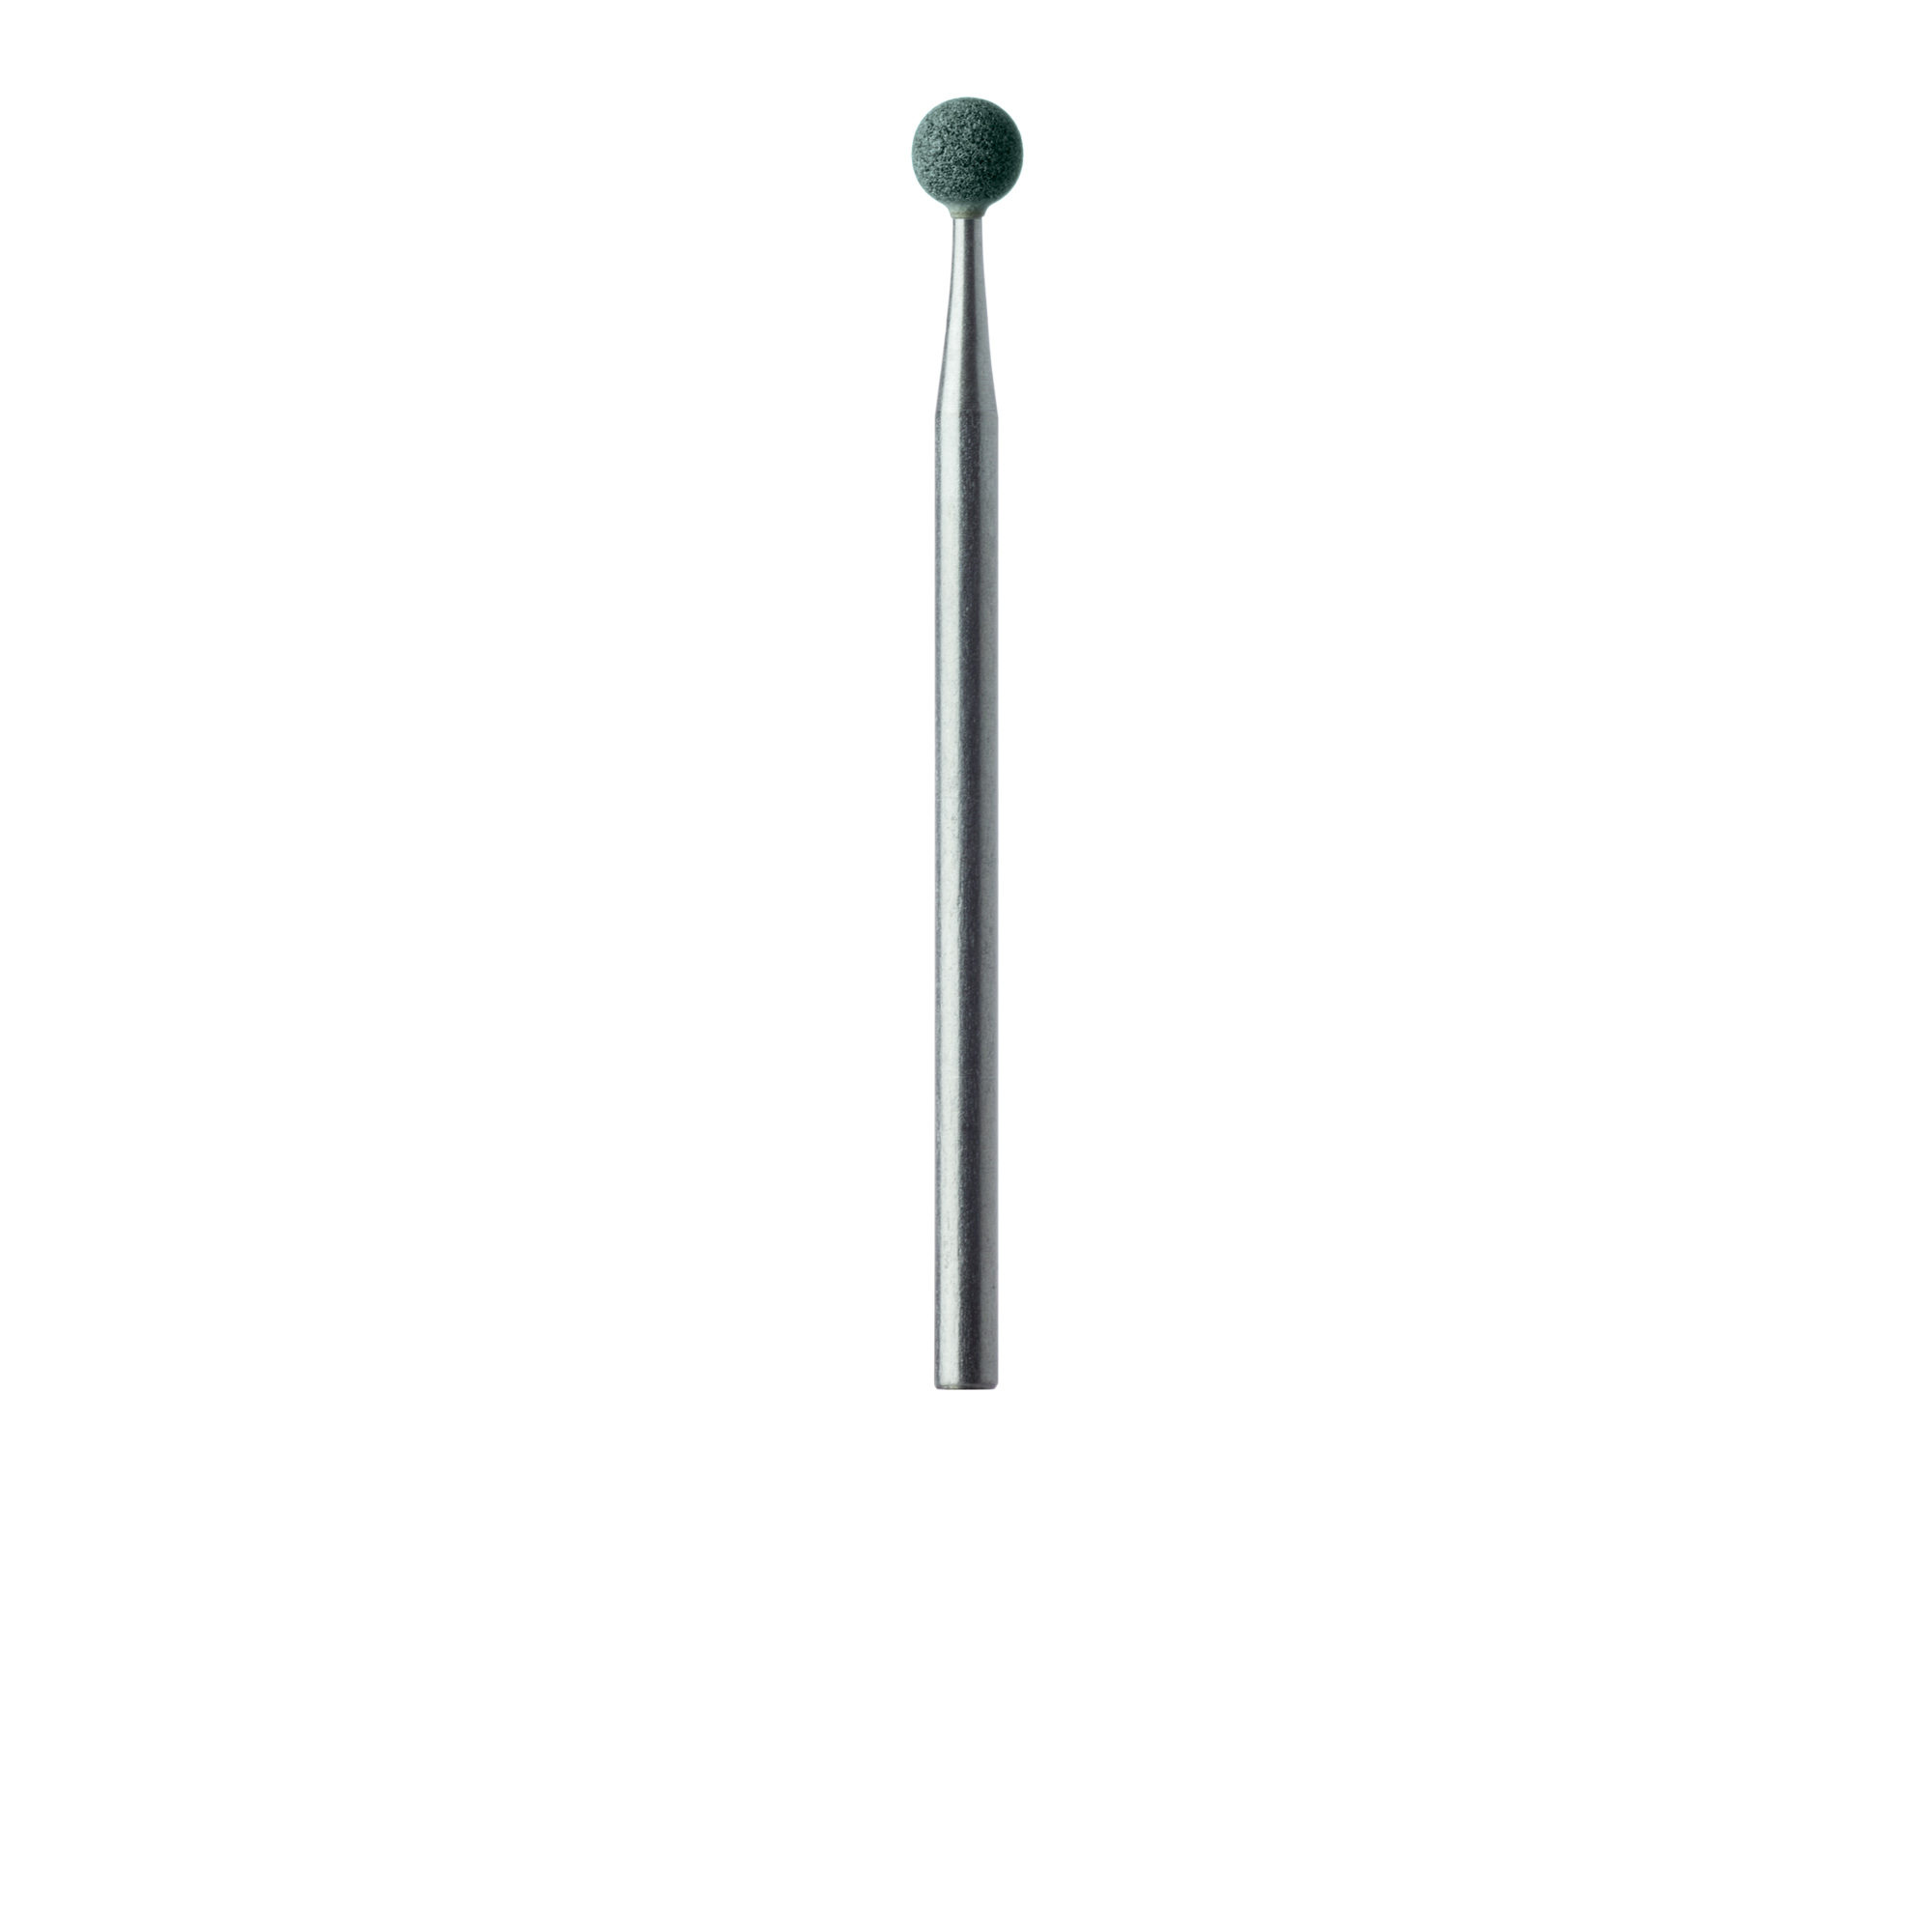 602-040-HP-GRN Abrasive, Green, Round, 4mm Ø, Medium, HP